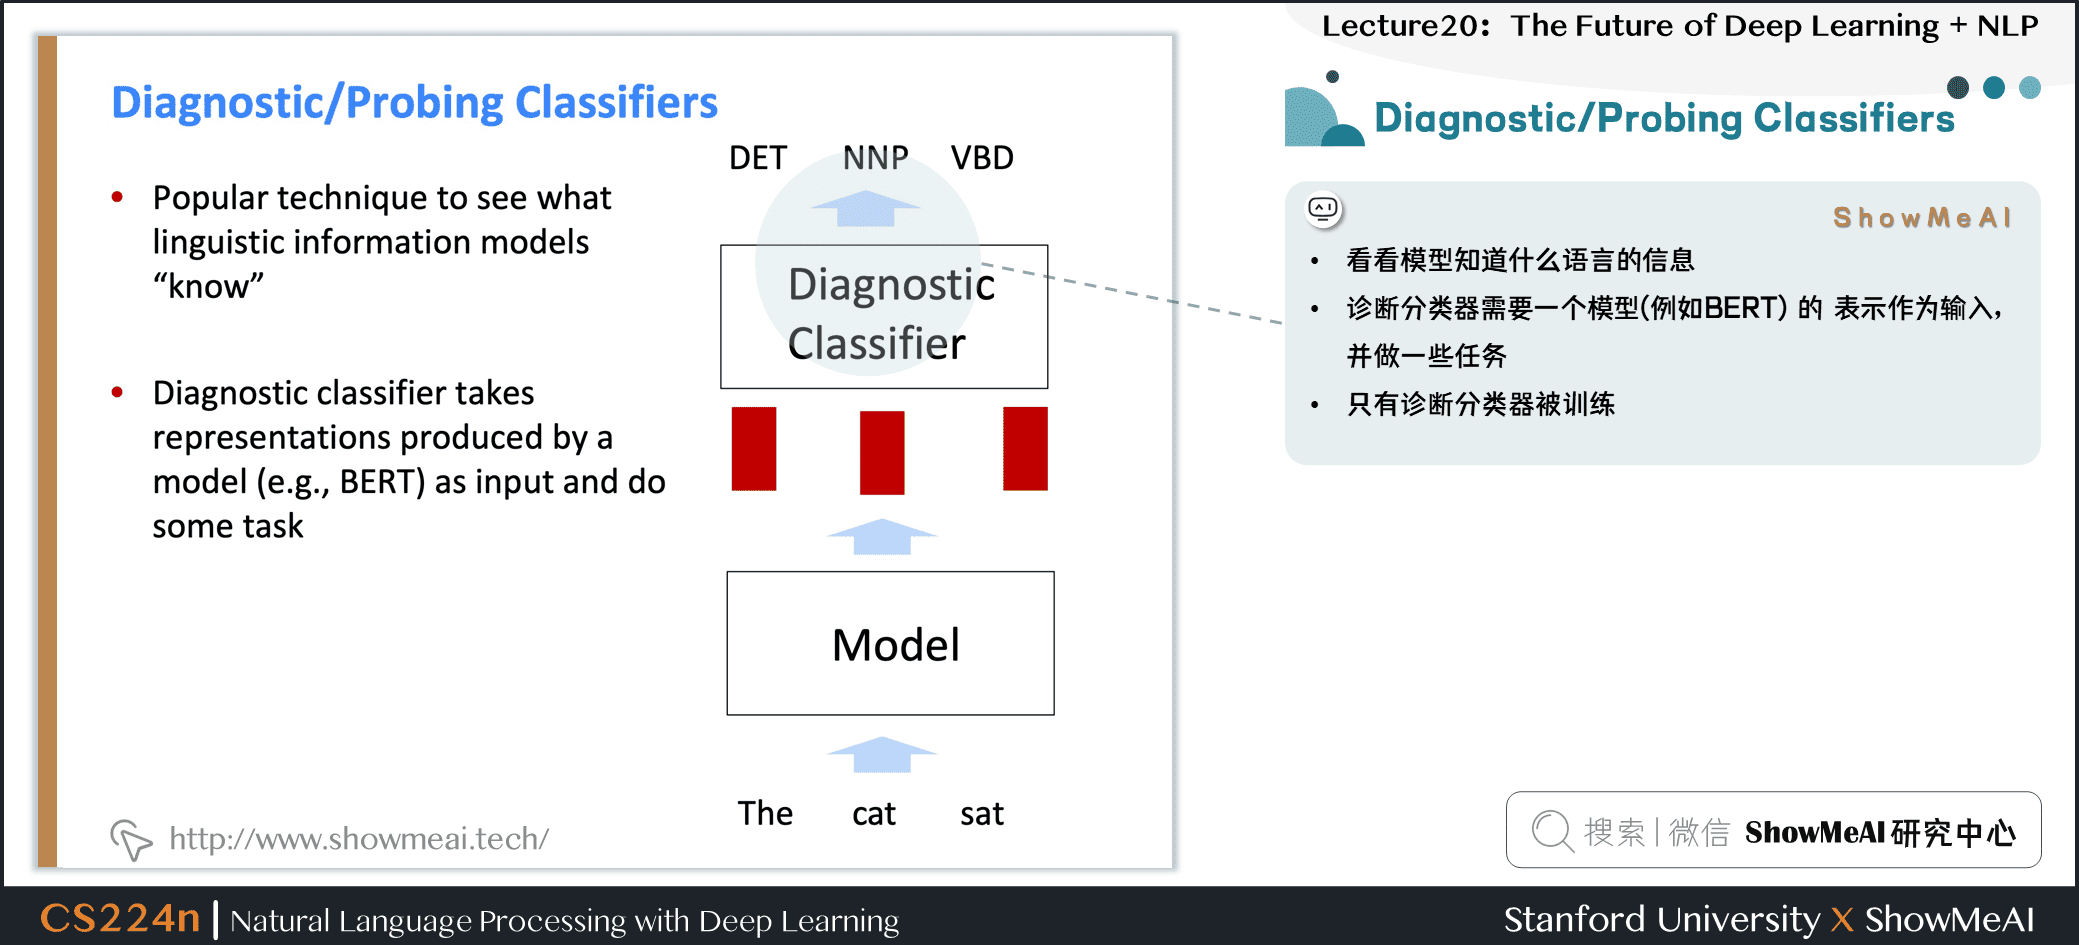 Diagnostic/Probing Classifiers